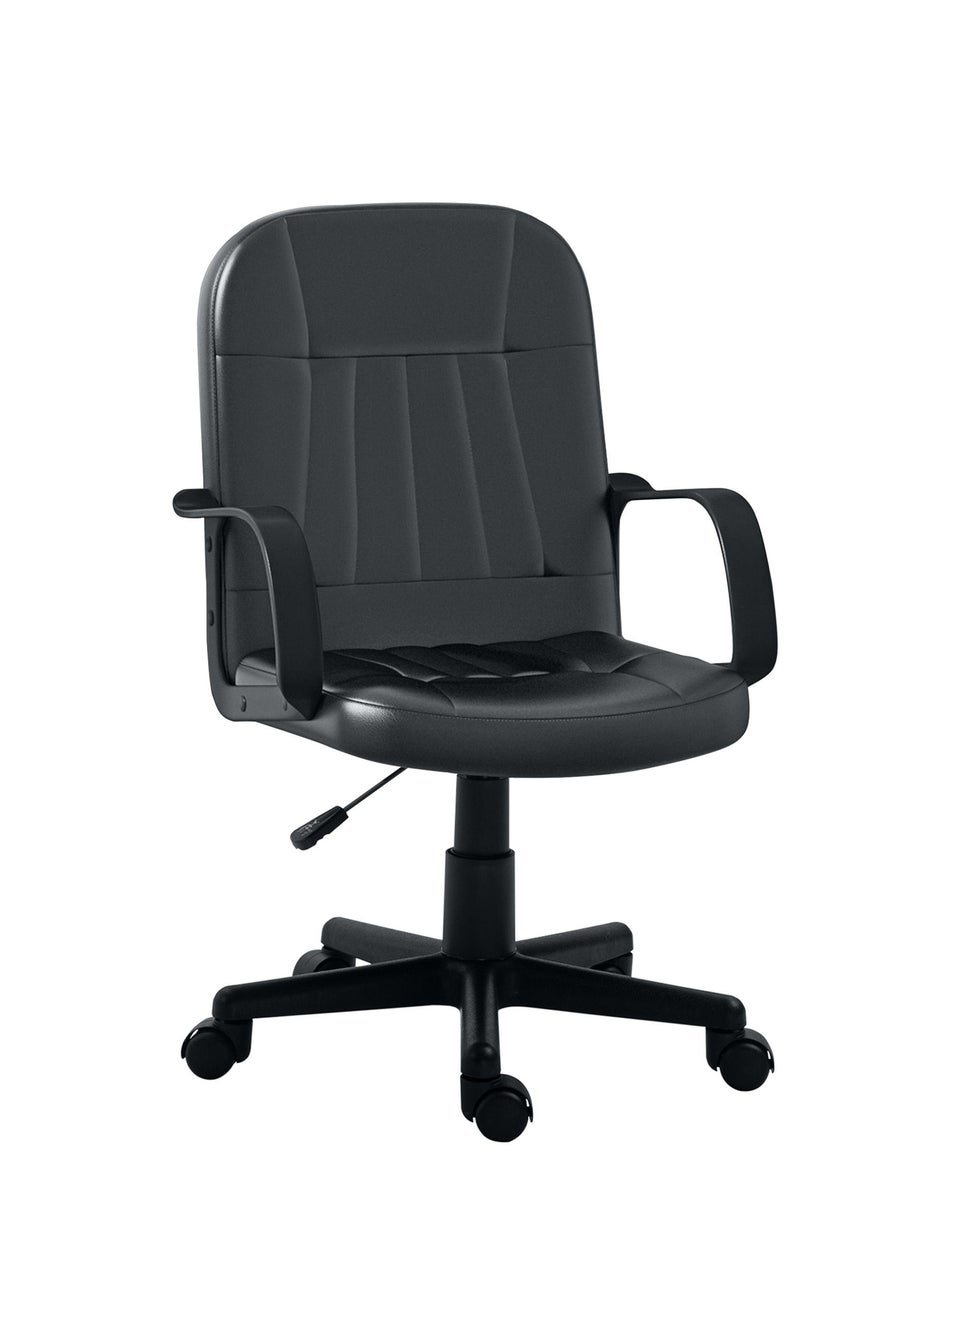 HOMCOM Black PU Leather Swivel Office Chair (59.5cm x 60cm x 104cm)